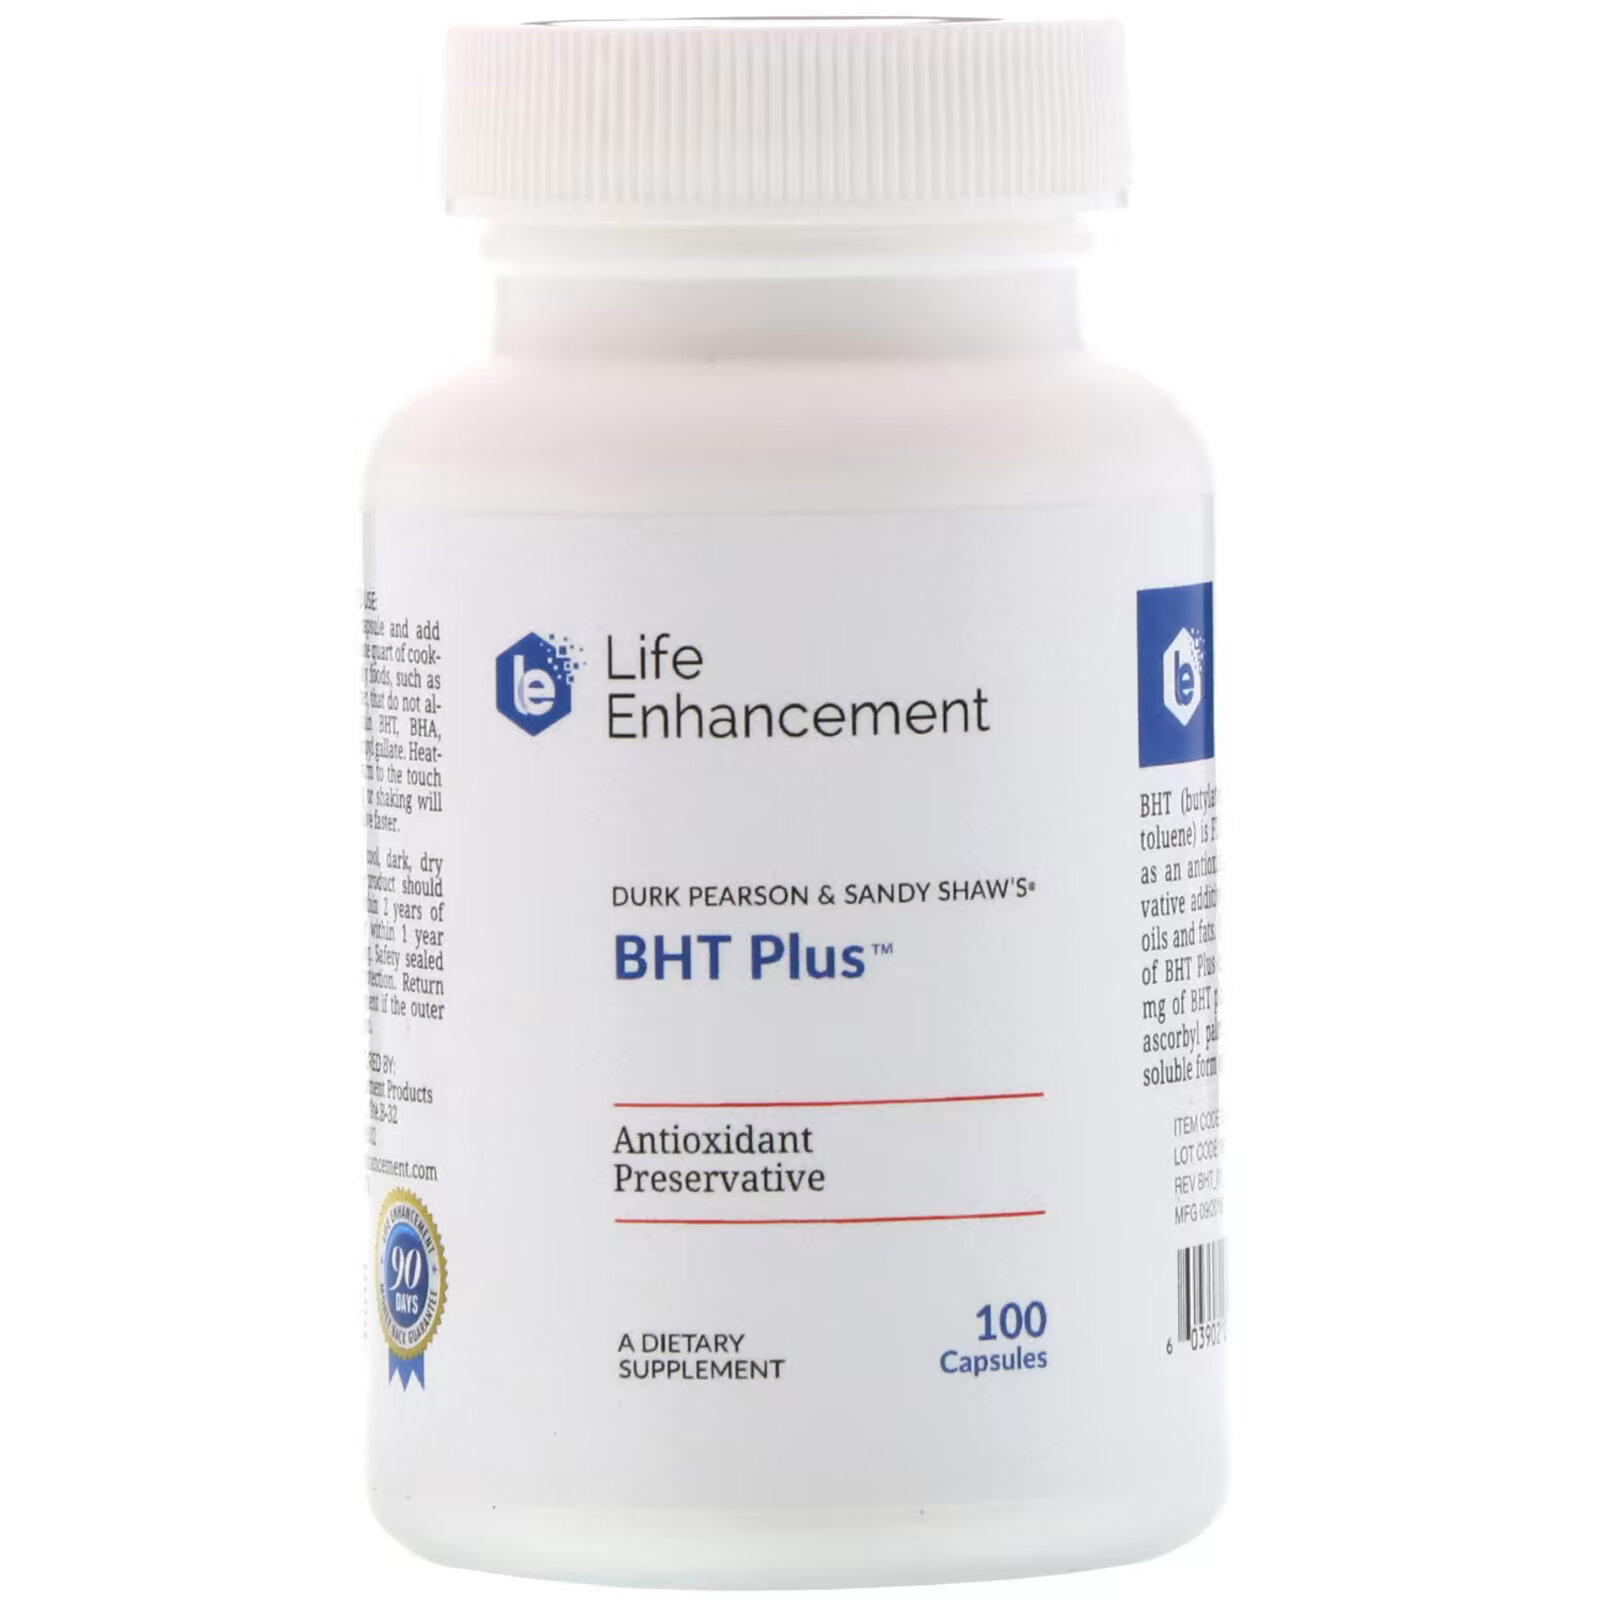 life enhancement durk pearson Life Enhancement, Durk Pearson & Sandy Shaw's BHT Plus, добавка с бутилгидрокситолуолом, 100 капсул